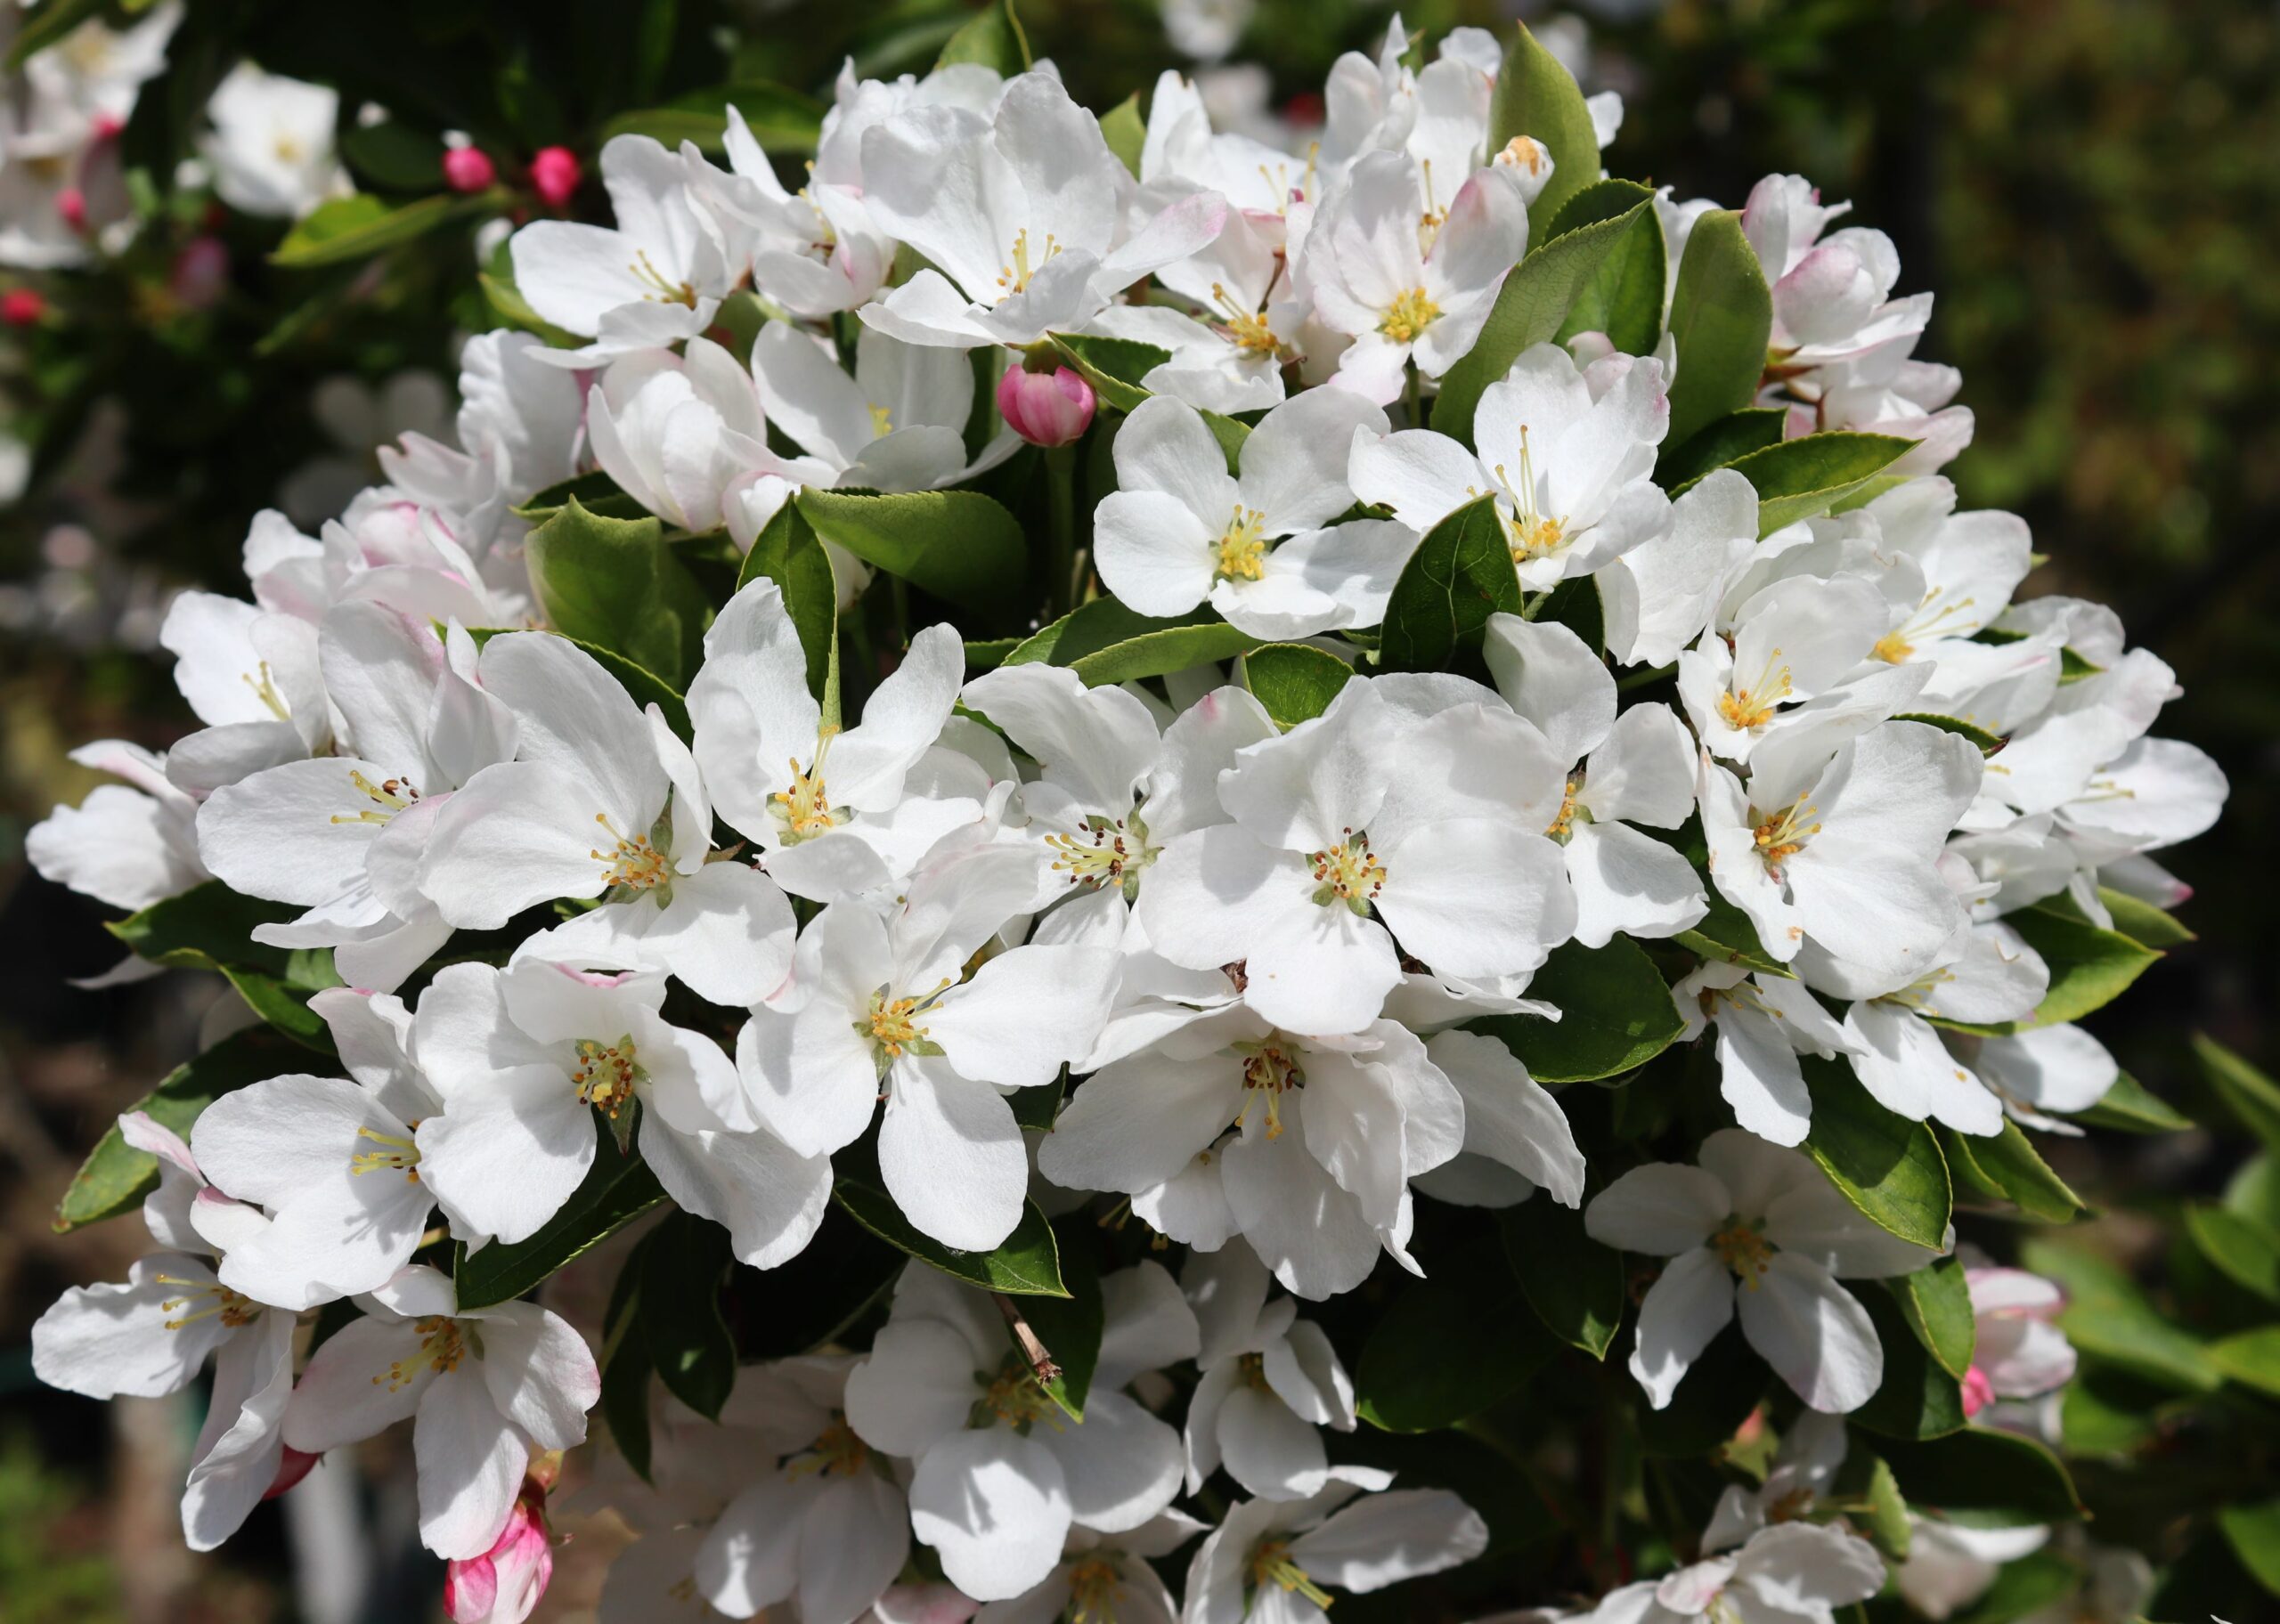 Malus adriondack white flower blossoms